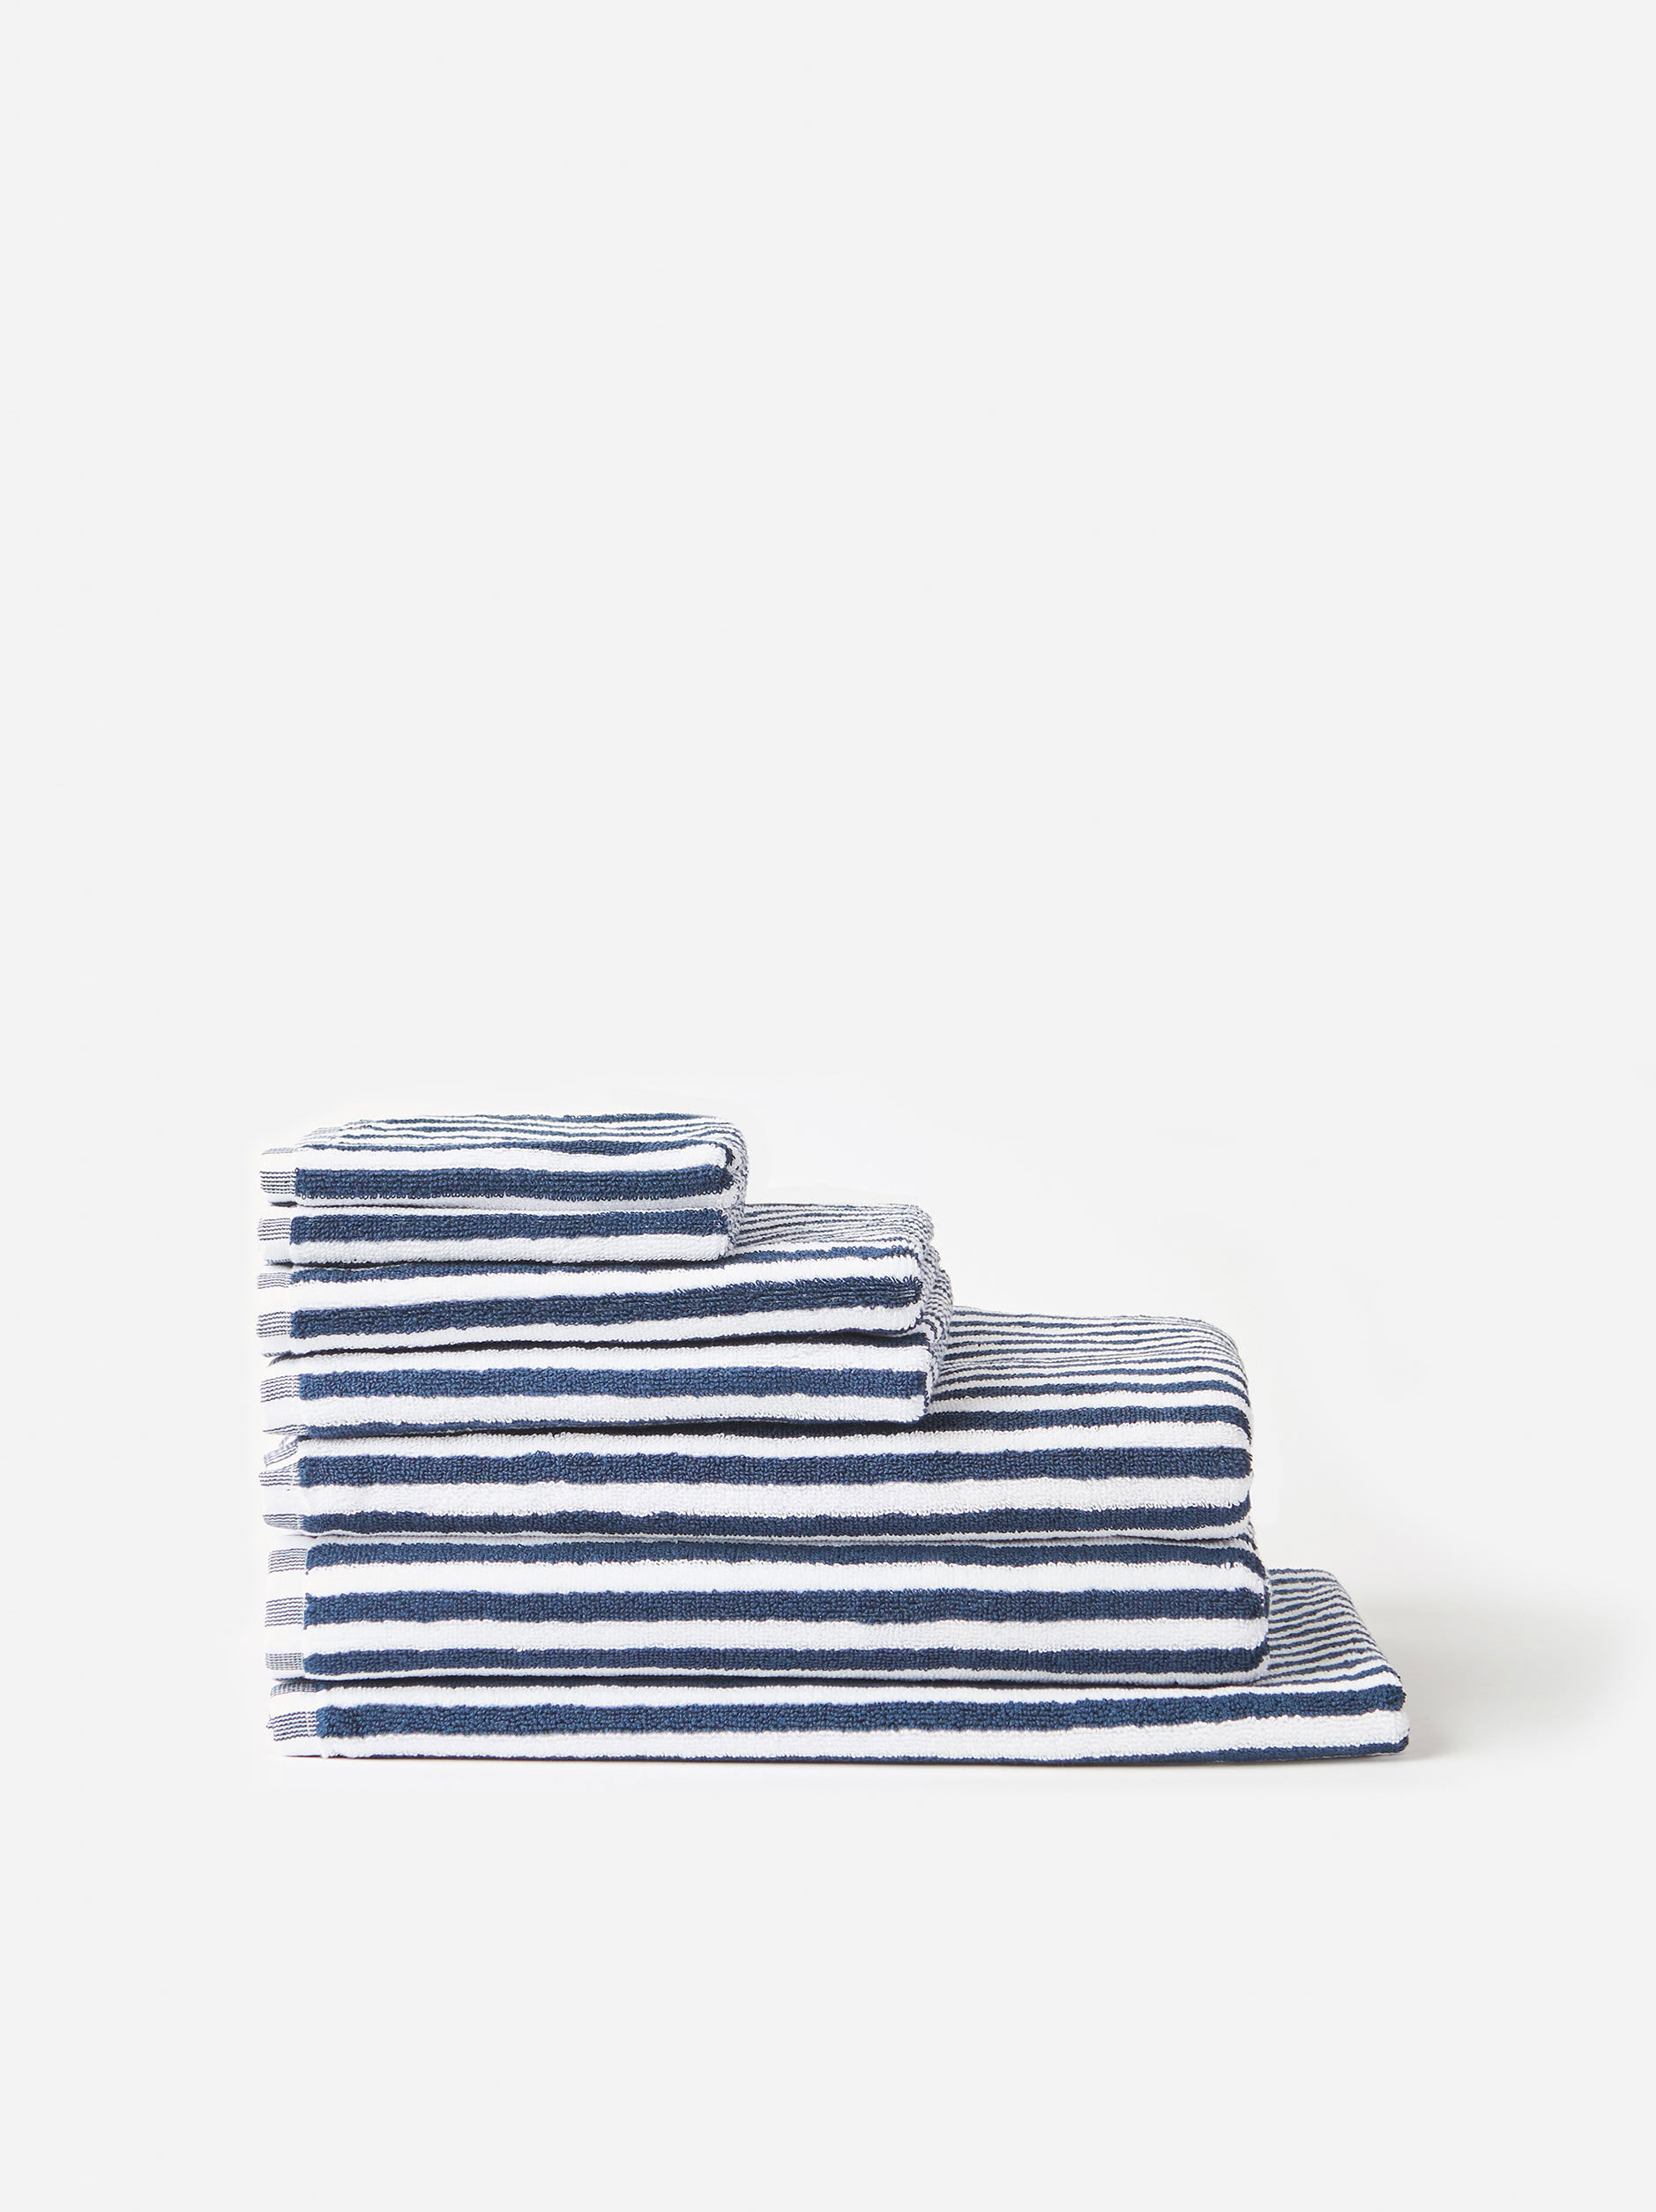 ClearloveWL Bath towel, Stripe Towel Set Face Towel Large Thick